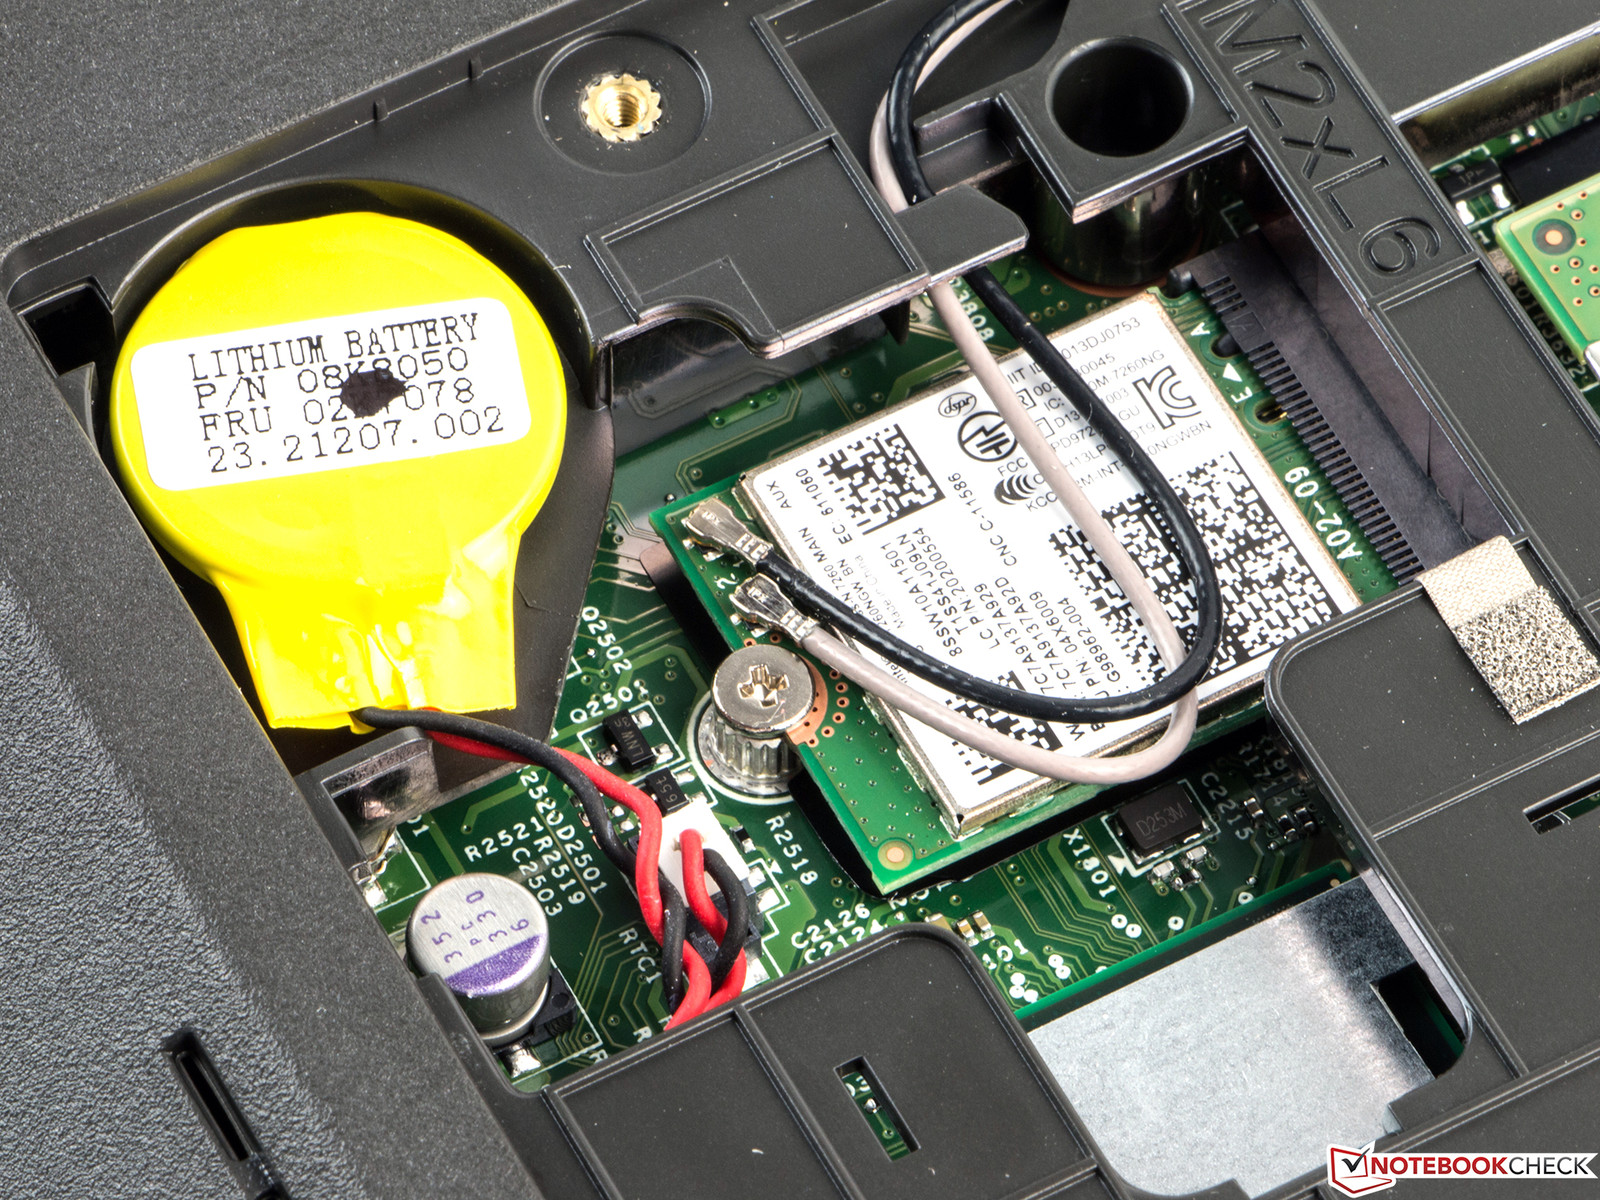 Cmos battery. Батарейка биос для ноутбука леново. Батарейка BIOS ASUS. Батарейка BIOS Acer s3.